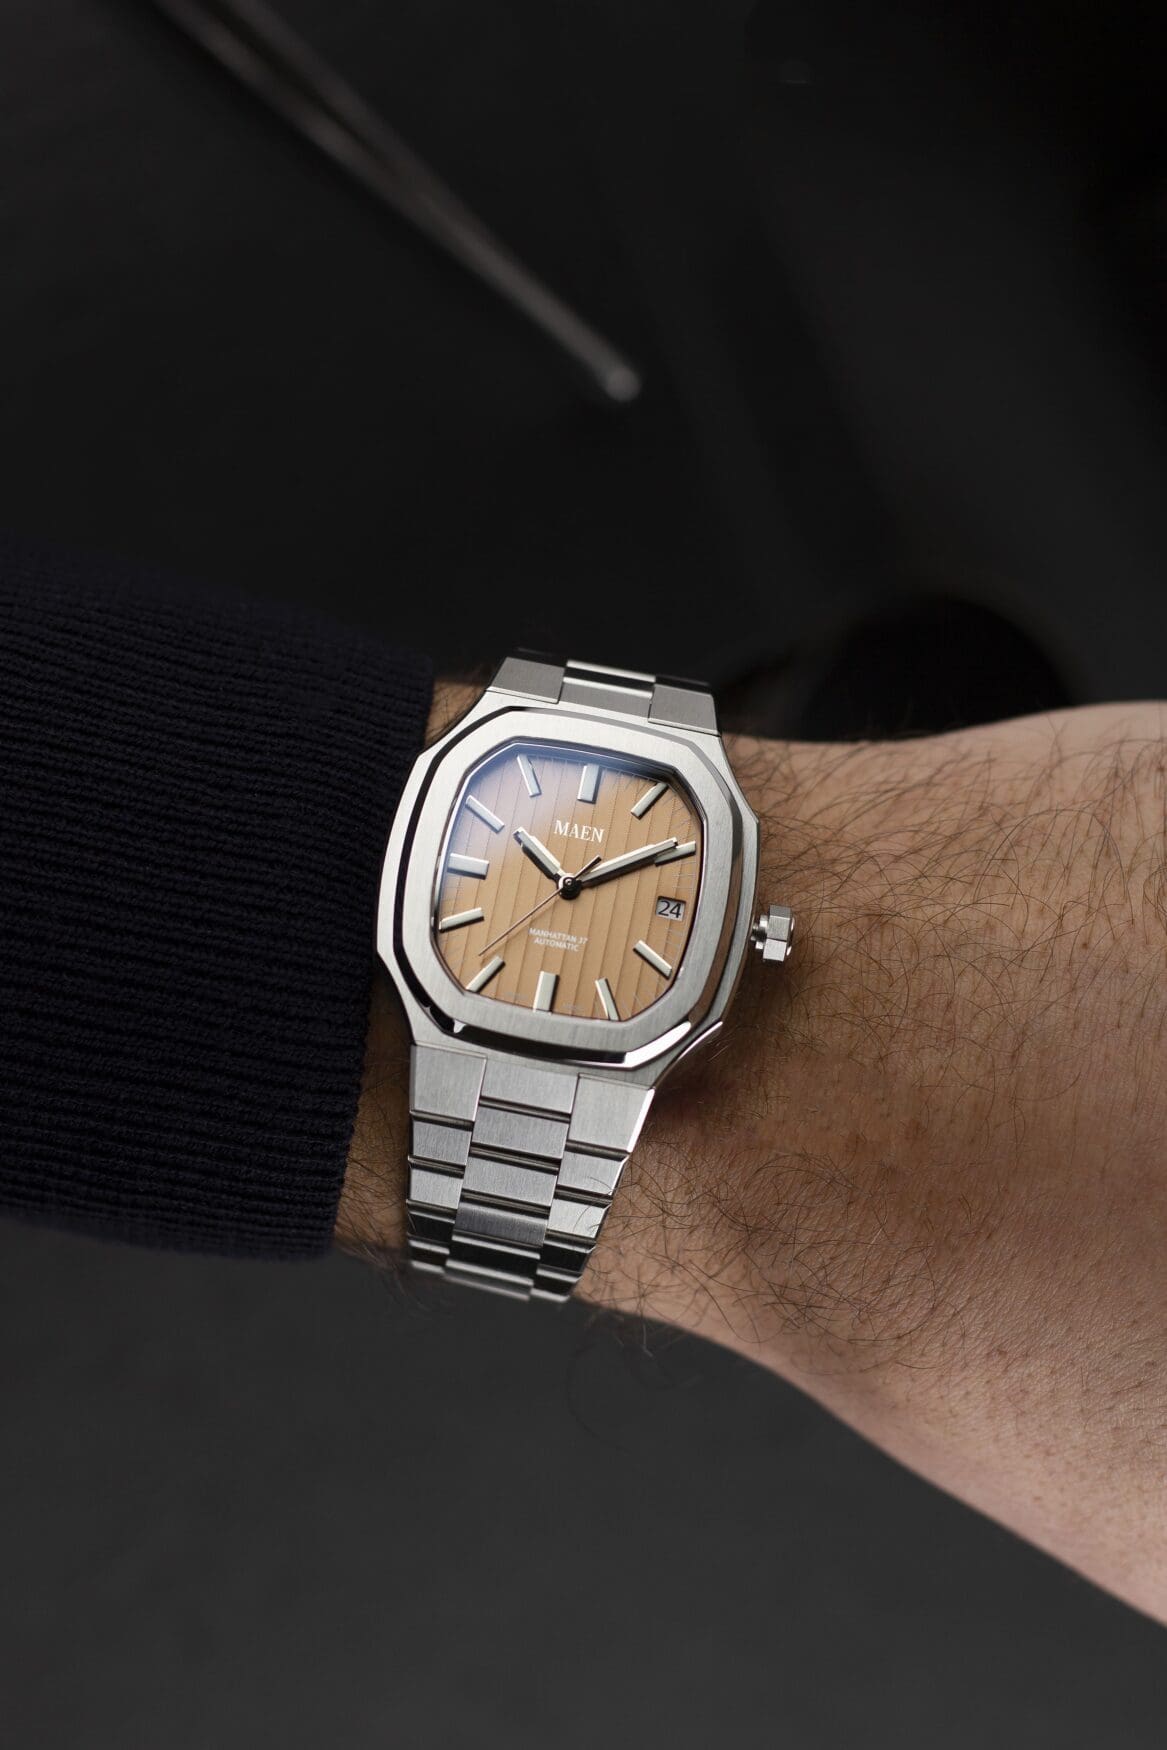 Maen Manhattan 37 is an integrated-bracelet watch at a great price